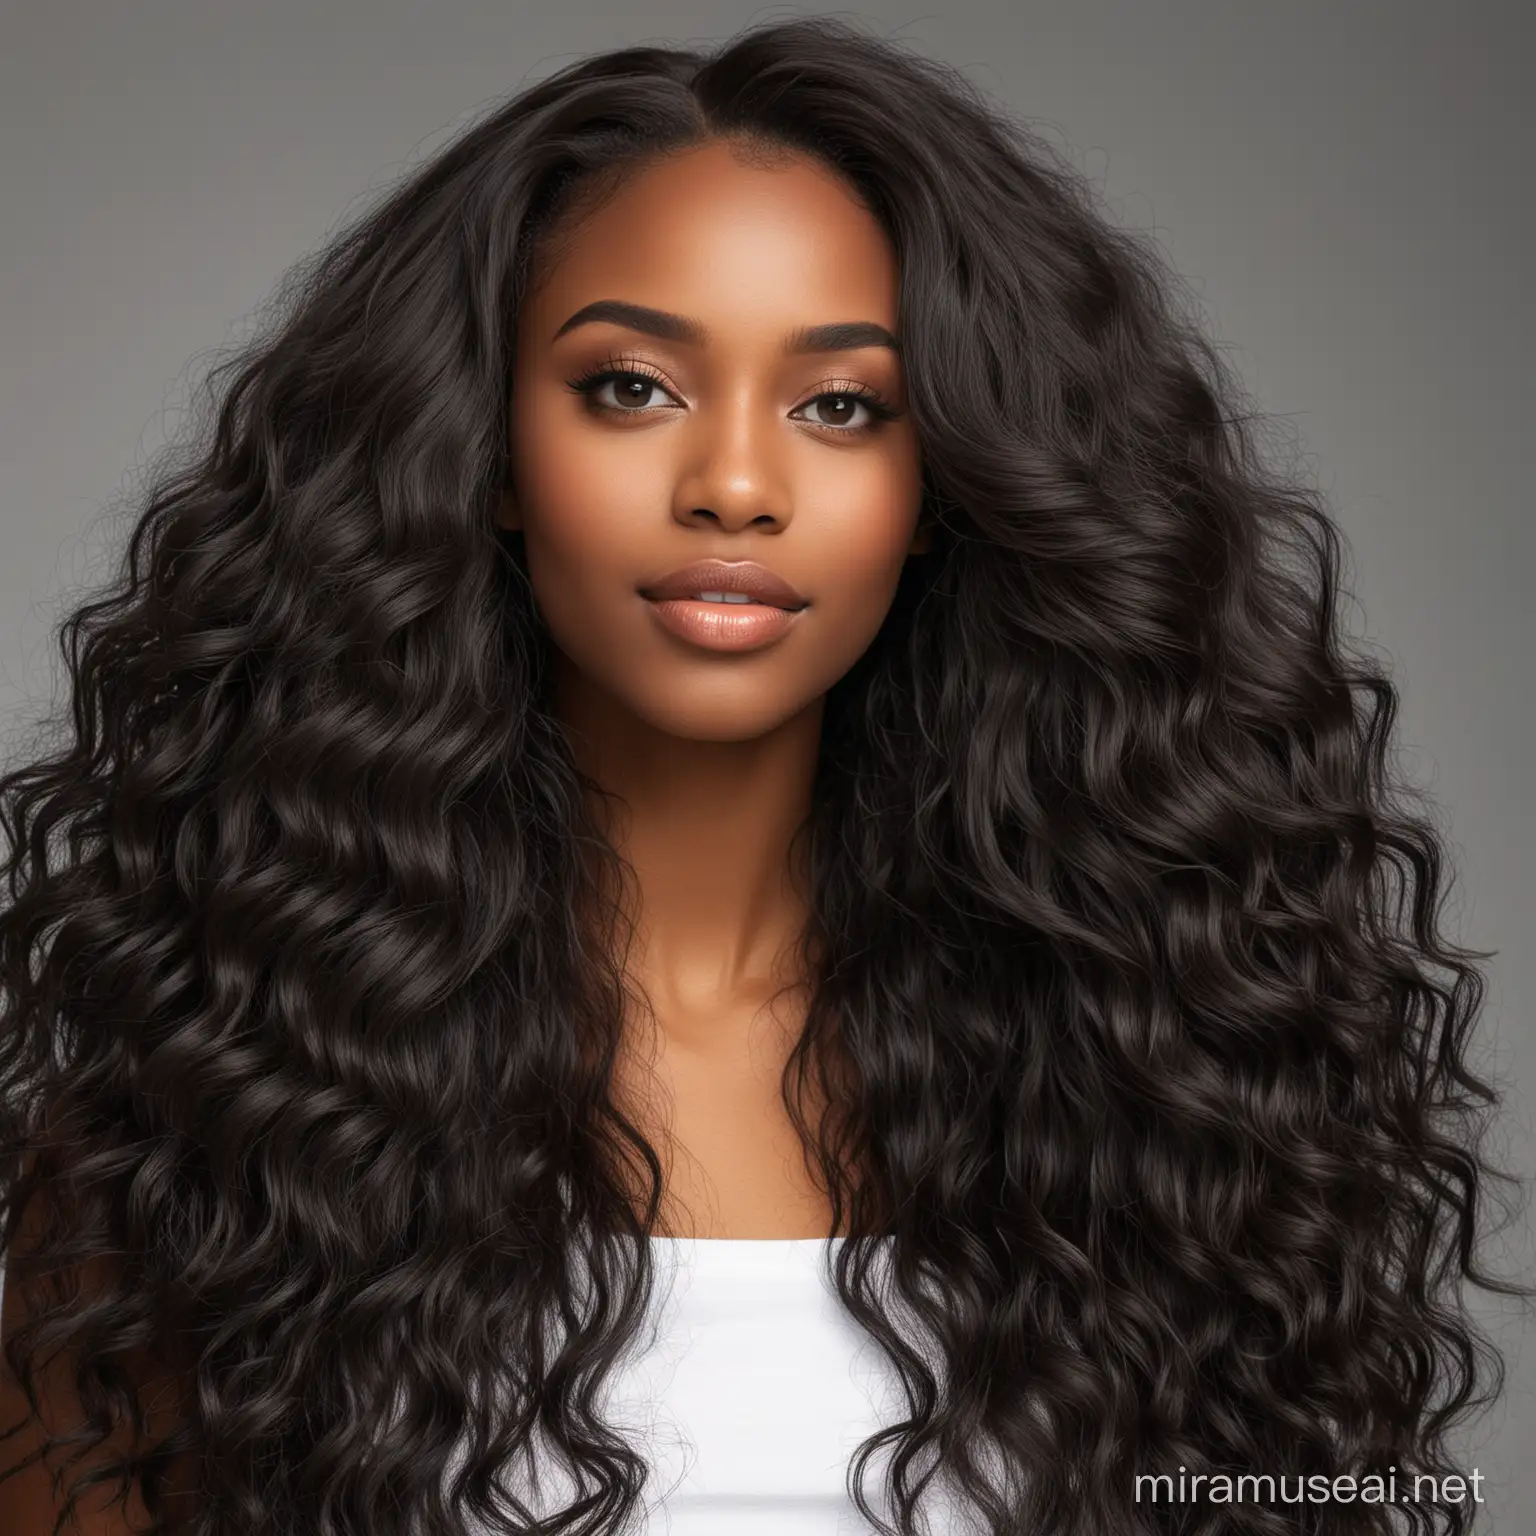 beautiful black girl with long wavy hair